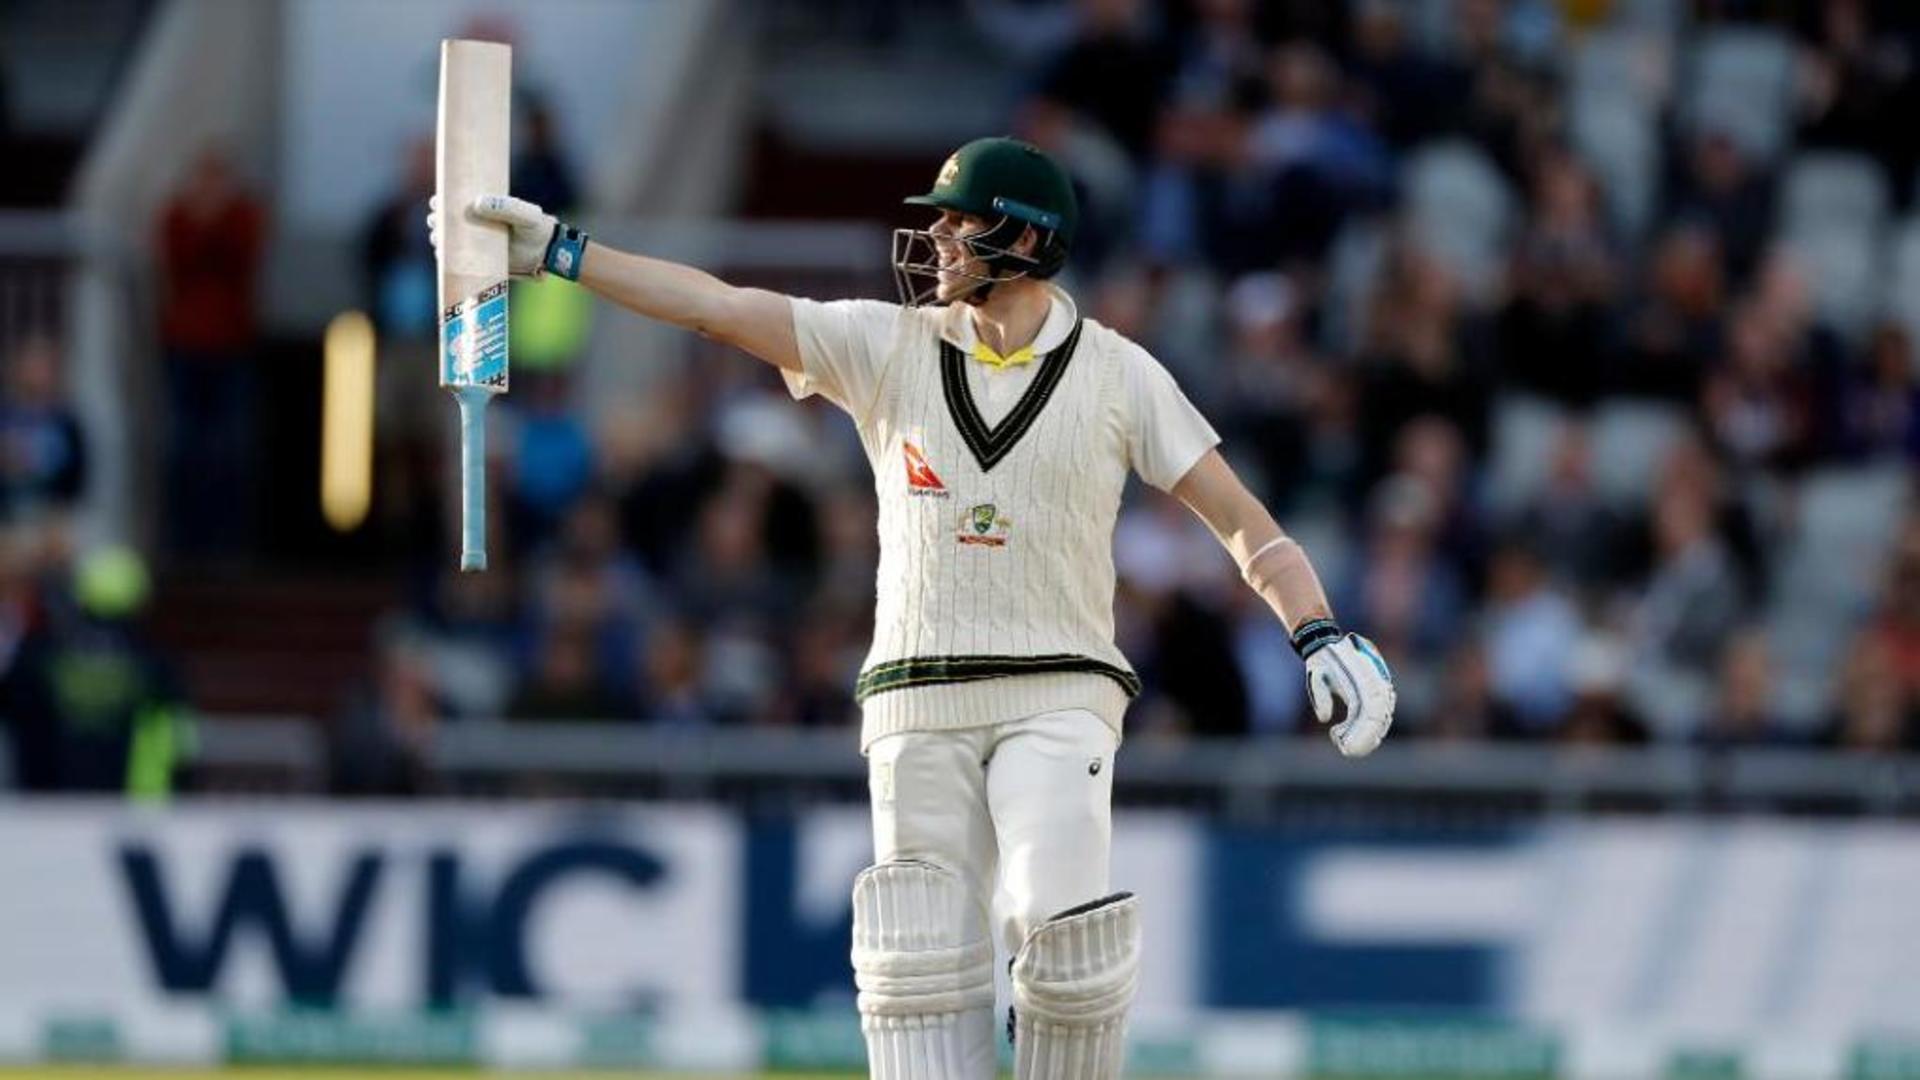 Steve Smith slams 29th Test century: Key stats